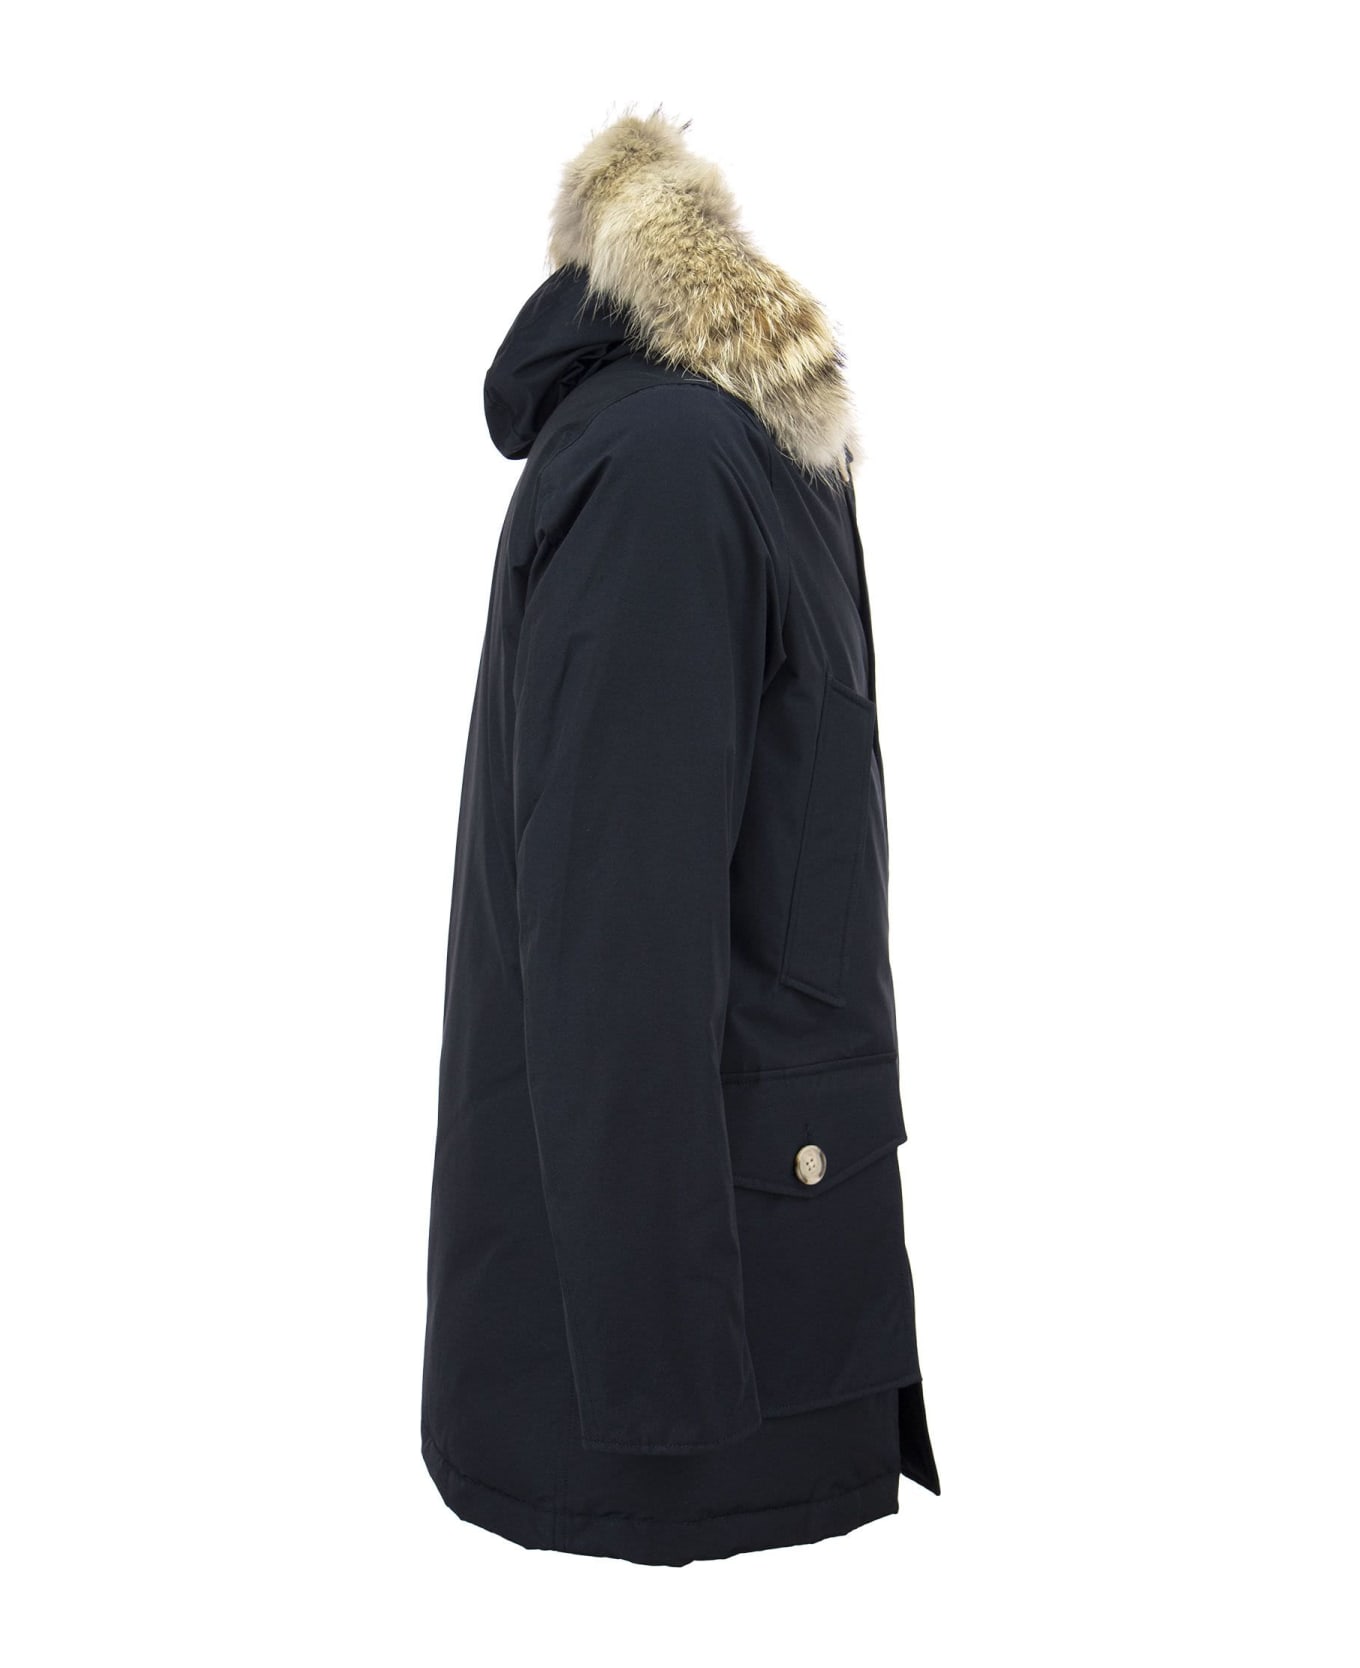 Woolrich Arctic Parka With Removable Fur Coat - Melton blue